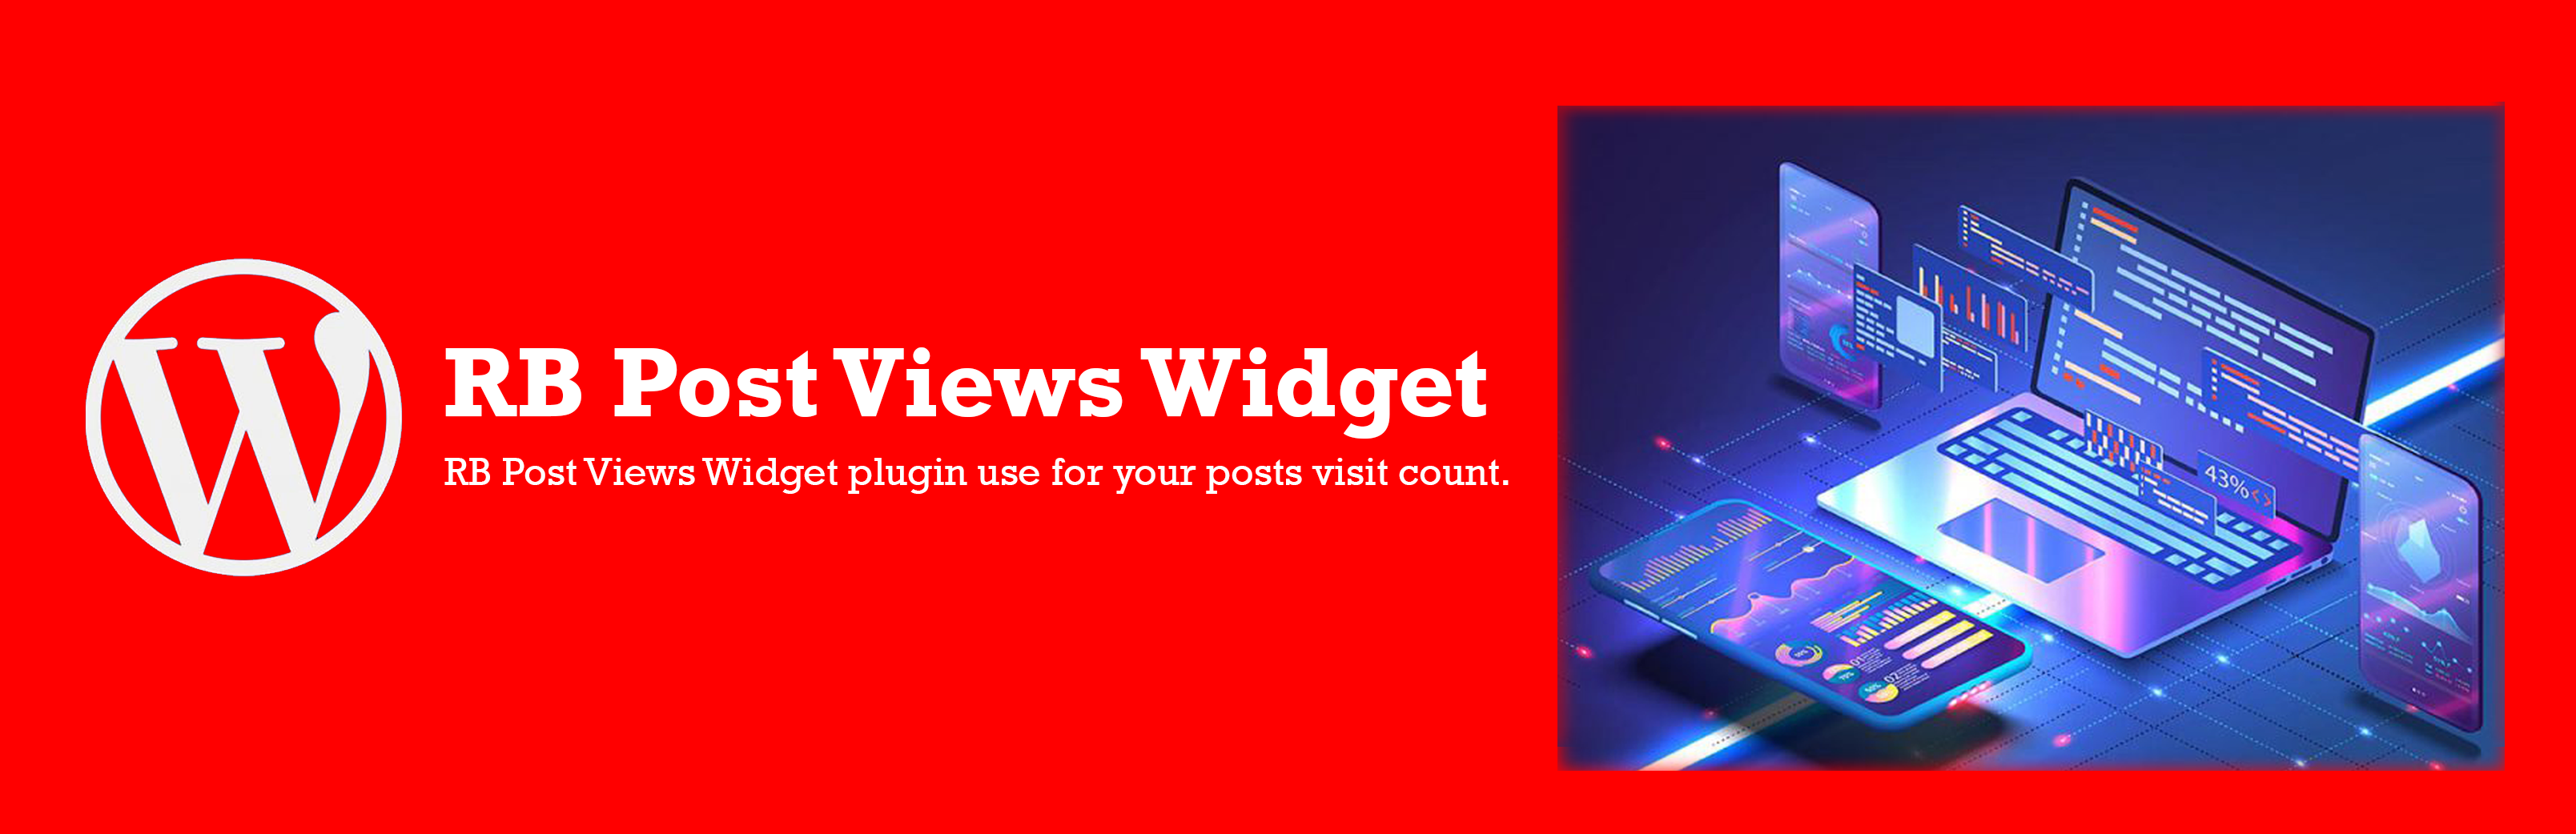 RB Post Views Widget Preview Wordpress Plugin - Rating, Reviews, Demo & Download